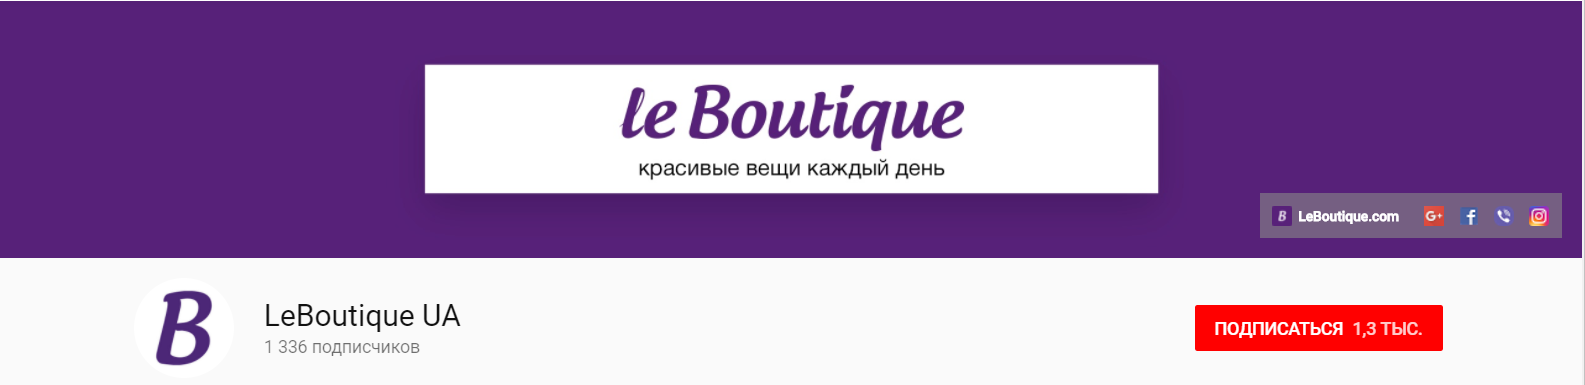 leBoutique-ідеї для фону каналу YouTube